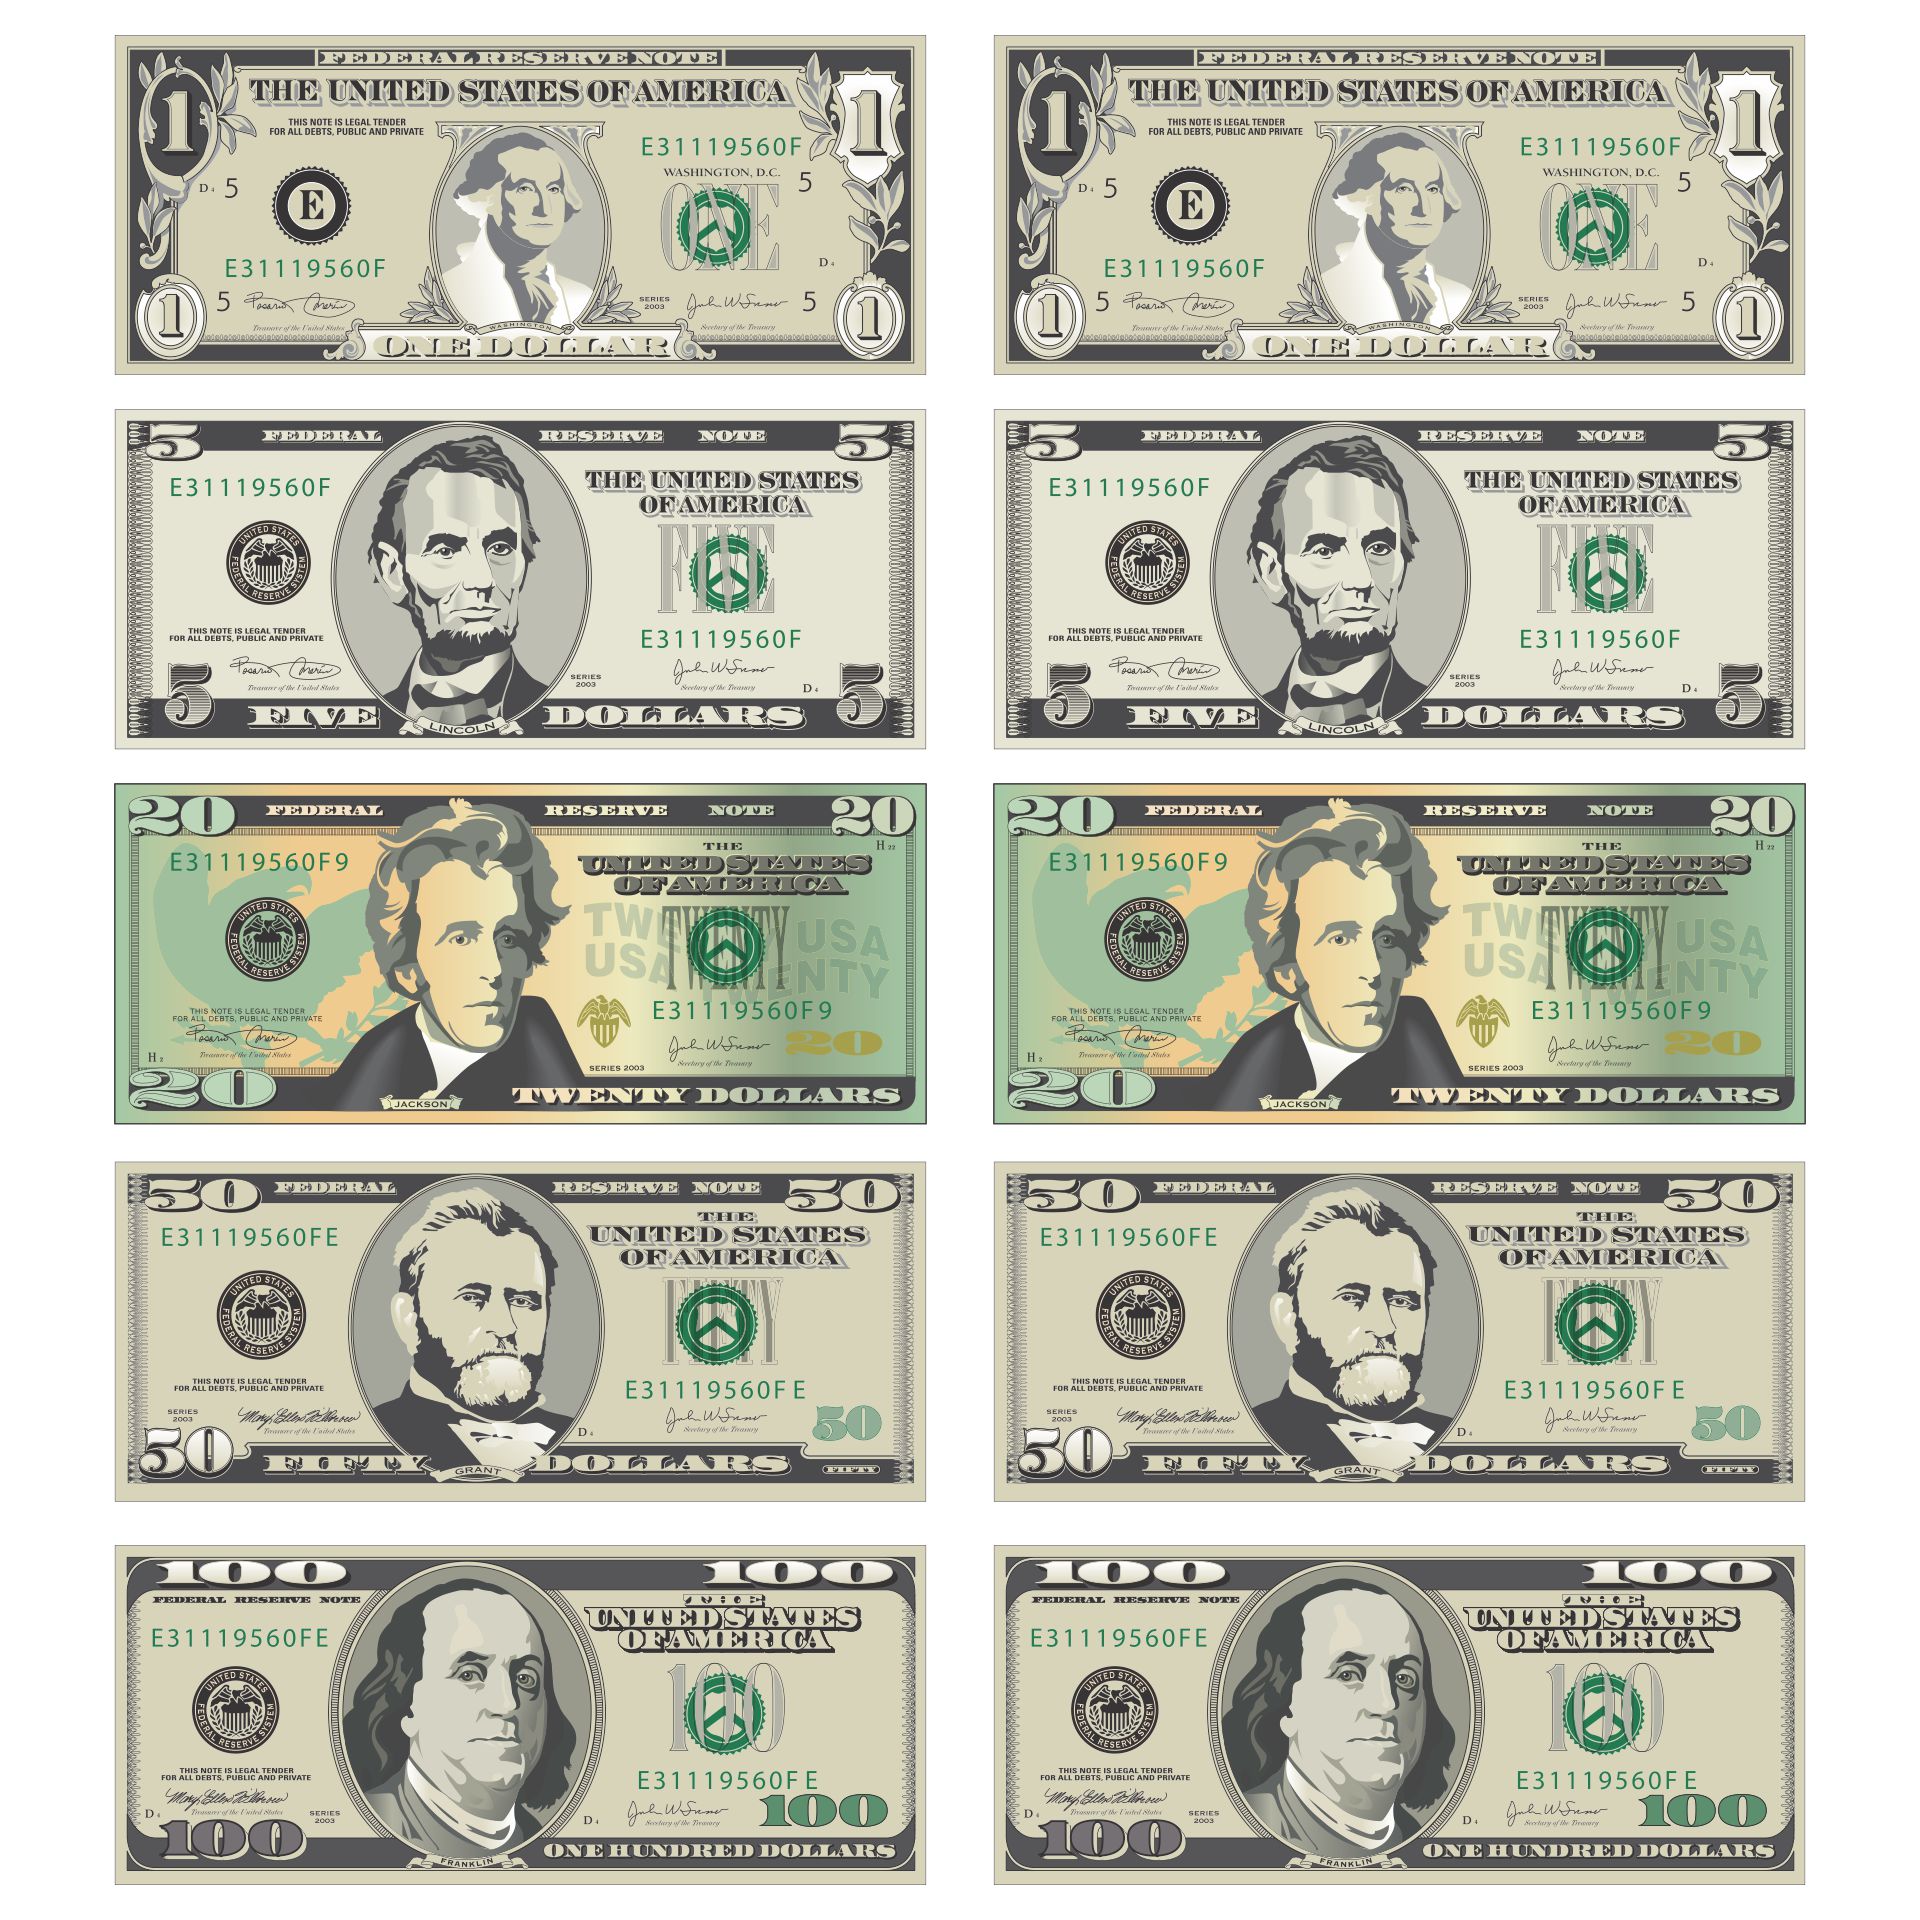 printable-fake-money-free-customize-and-print